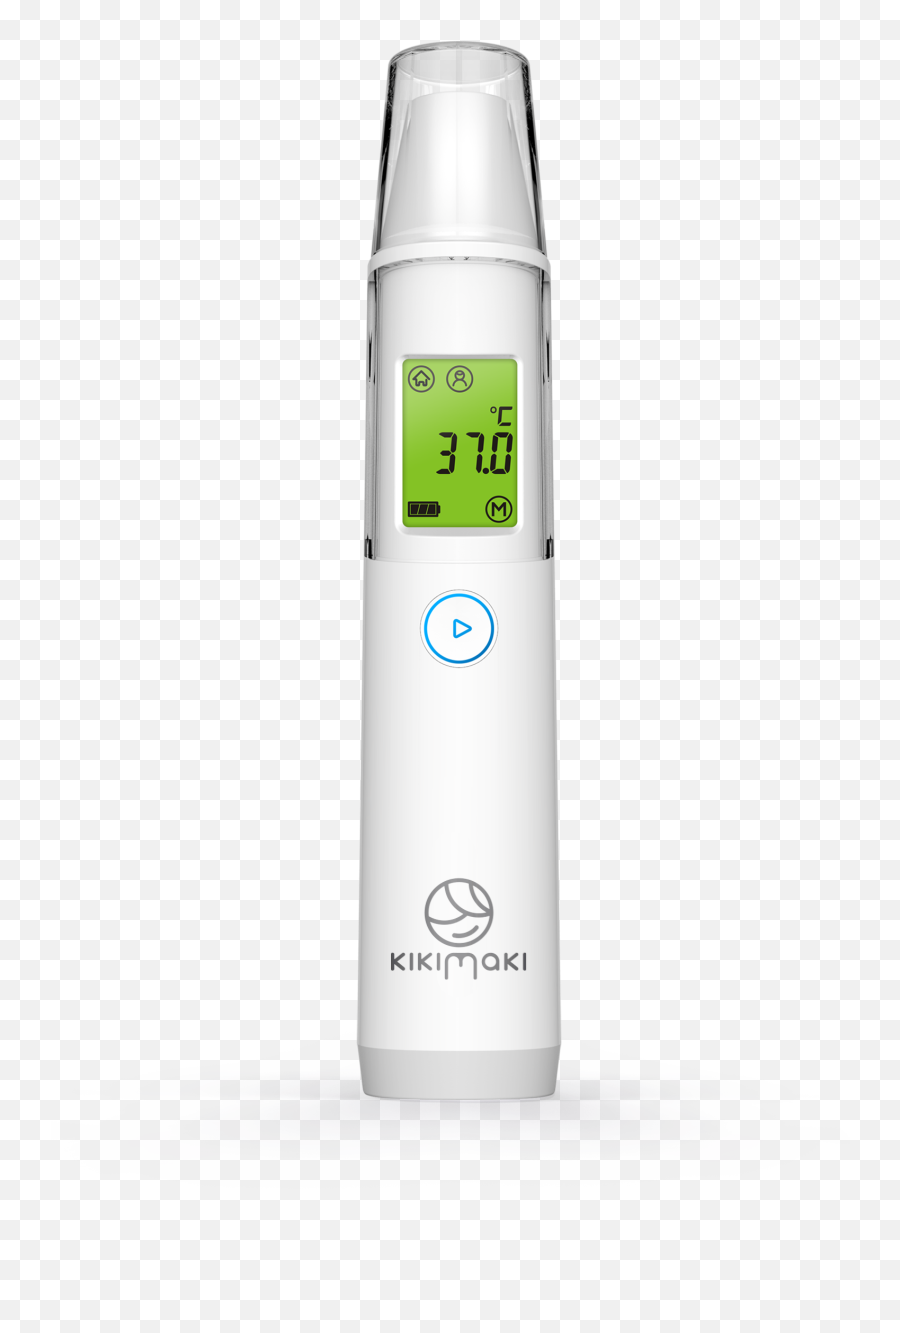 Kikimaki - Thermometer Emoji,Emotion Thermommeter